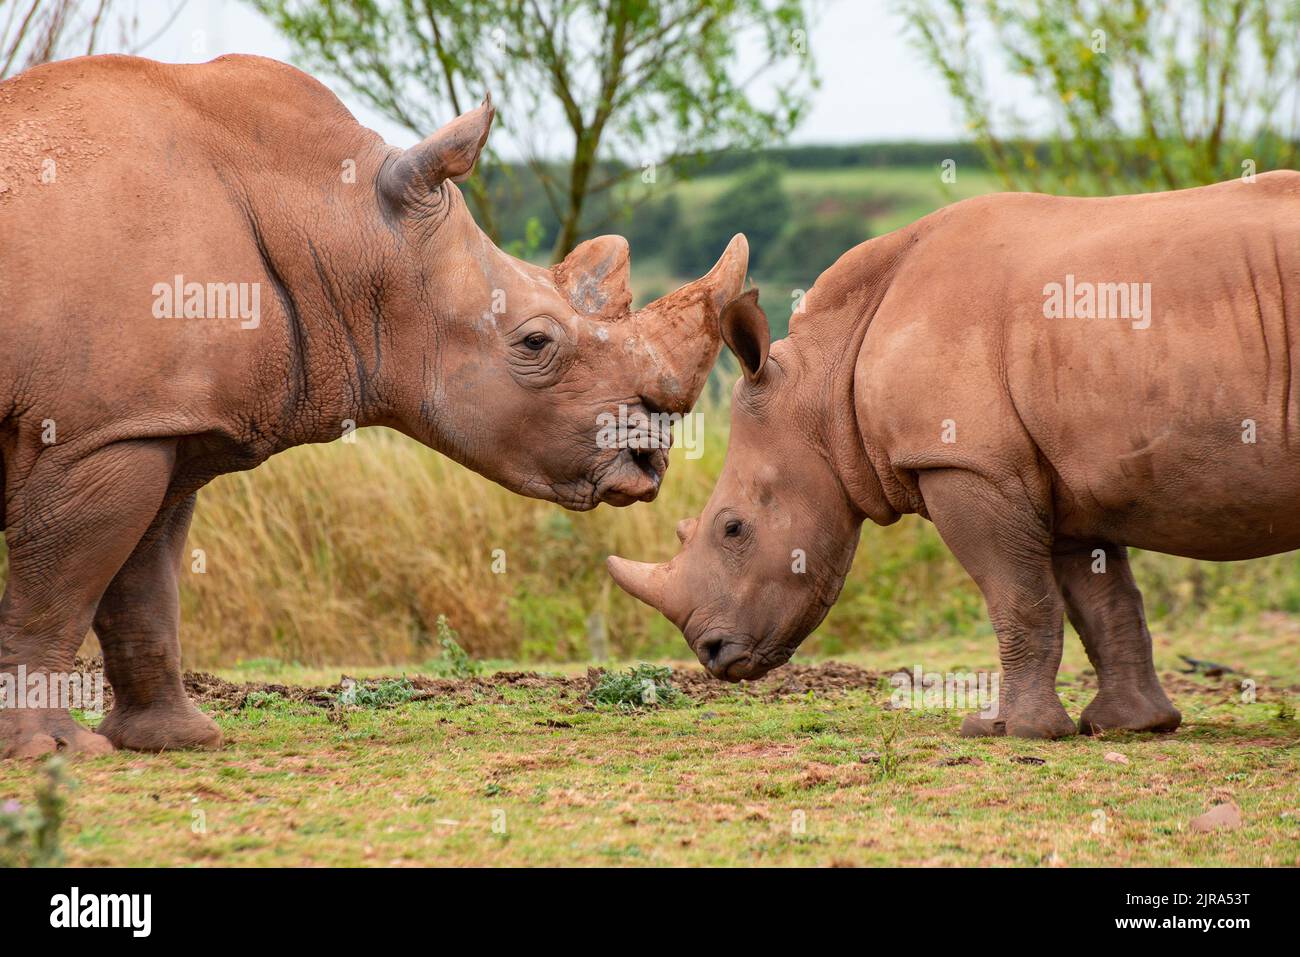 Southern White rhinoceros at the Safari Zoo, Cumbria, UK Stock Photo